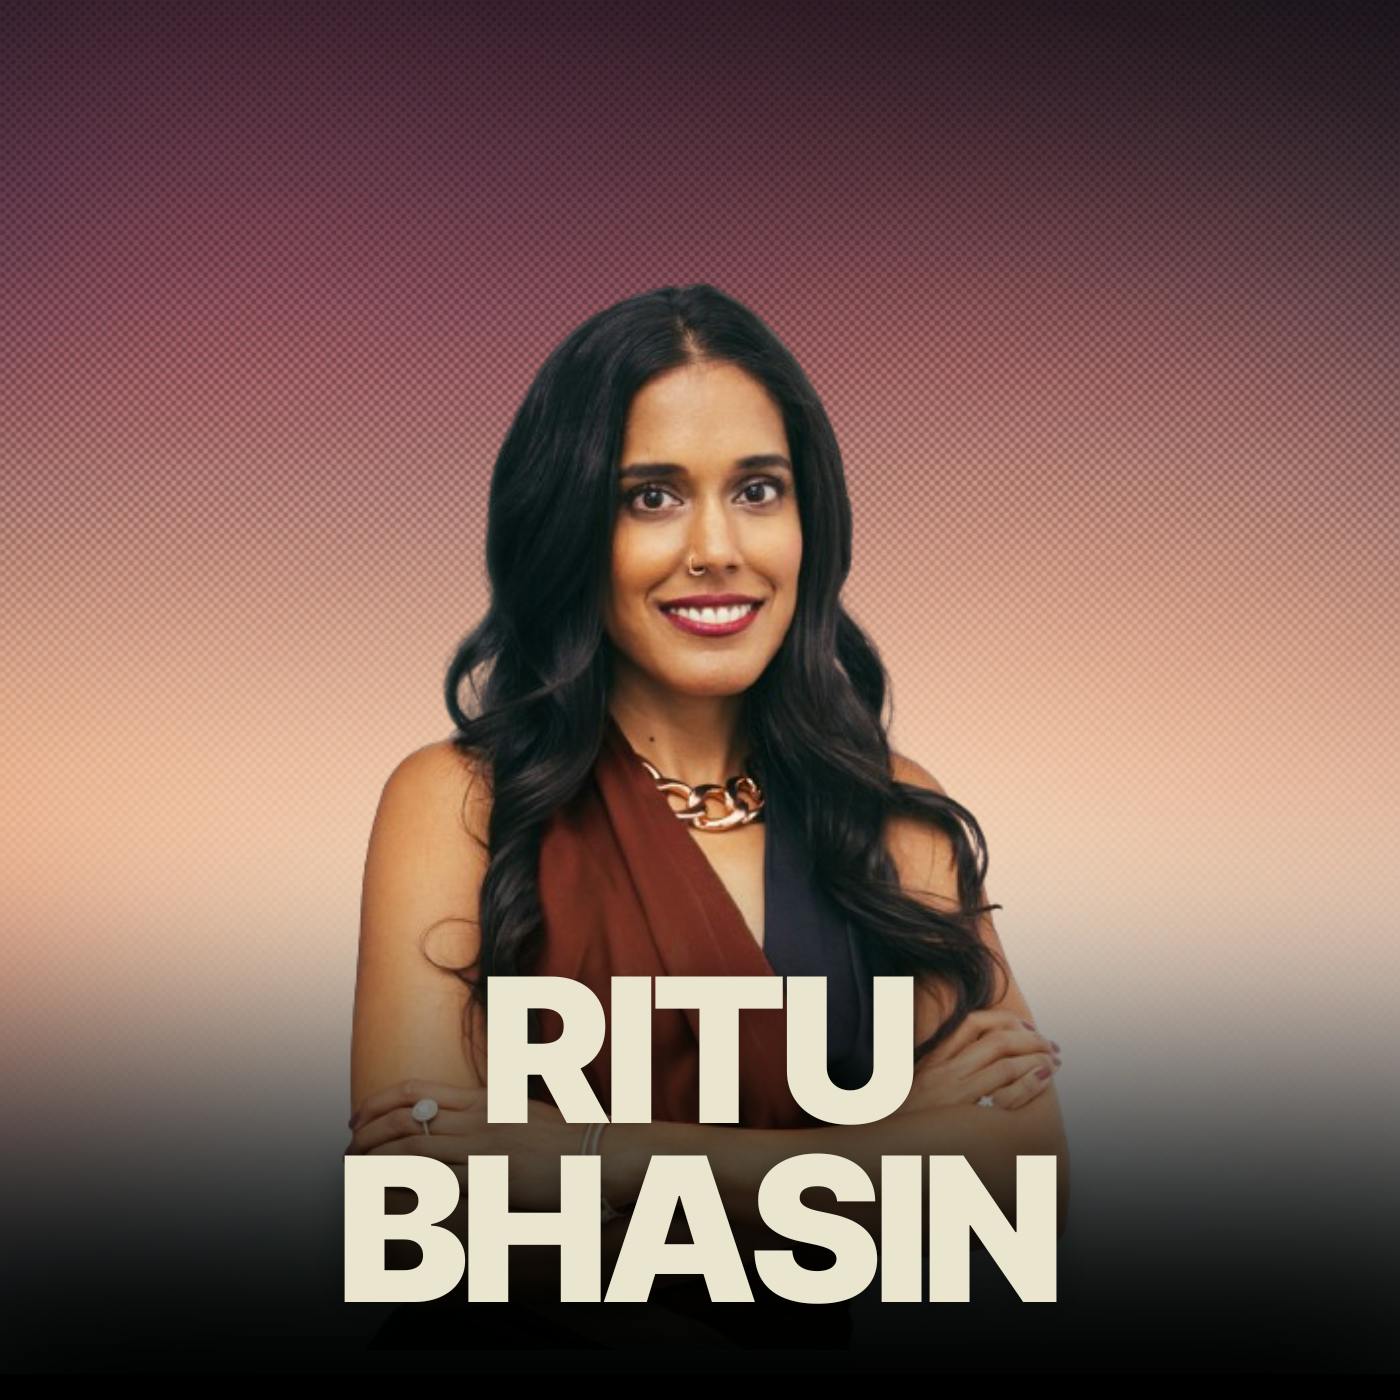 Ritu Bhasin On How To Find True Belonging Vs Merely Fitting In